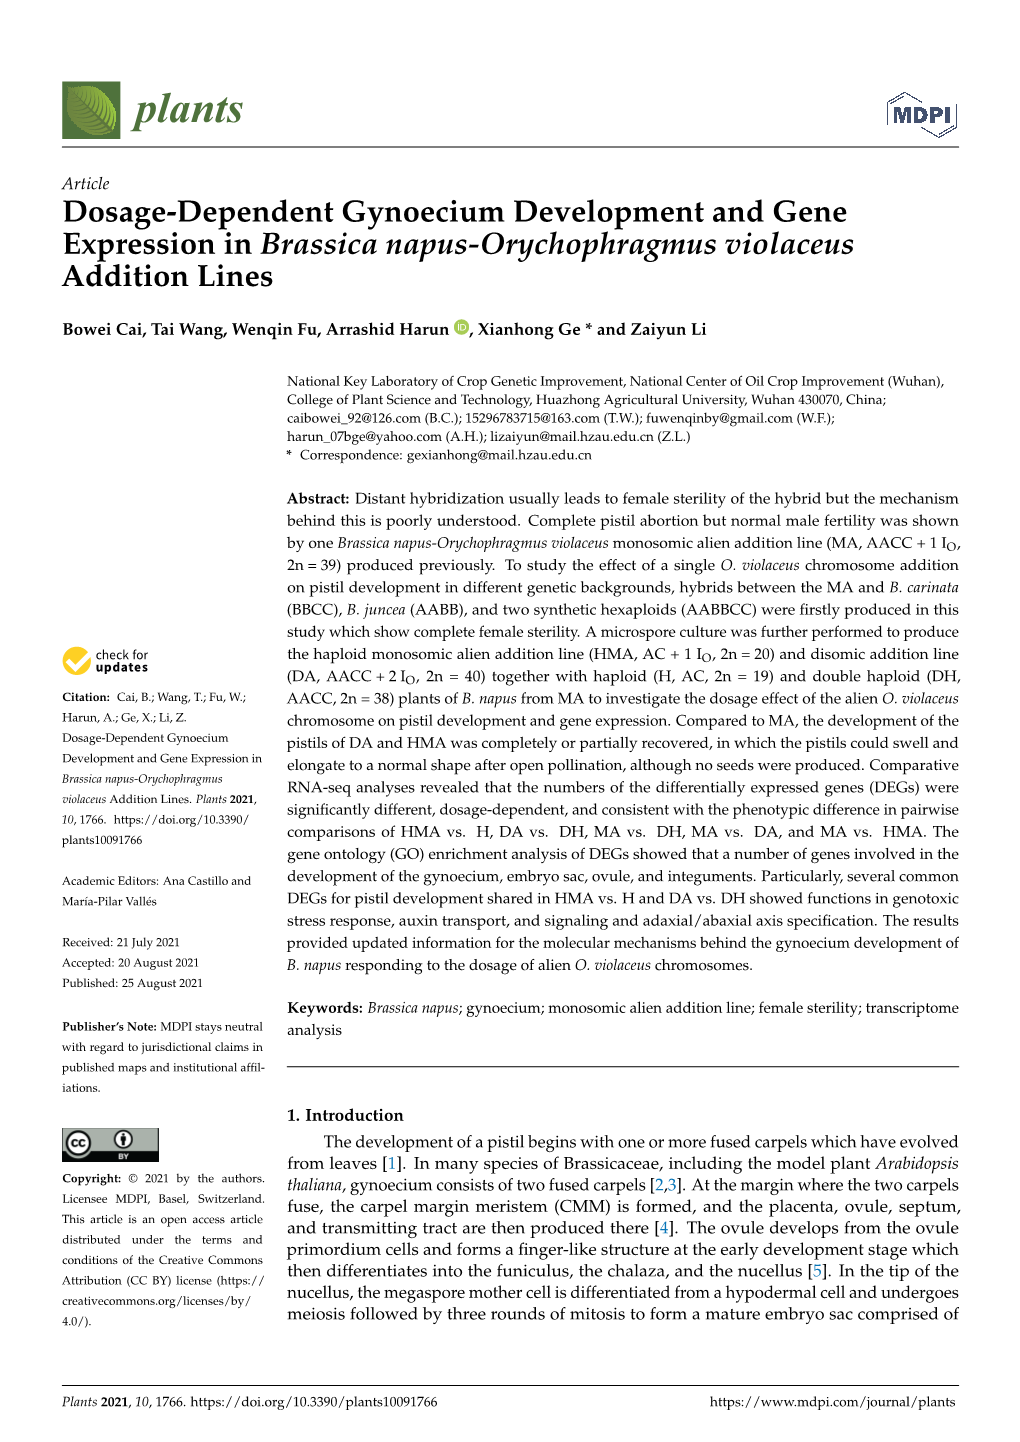 Dosage-Dependent Gynoecium Development and Gene Expression in Brassica Napus-Orychophragmus Violaceus Addition Lines